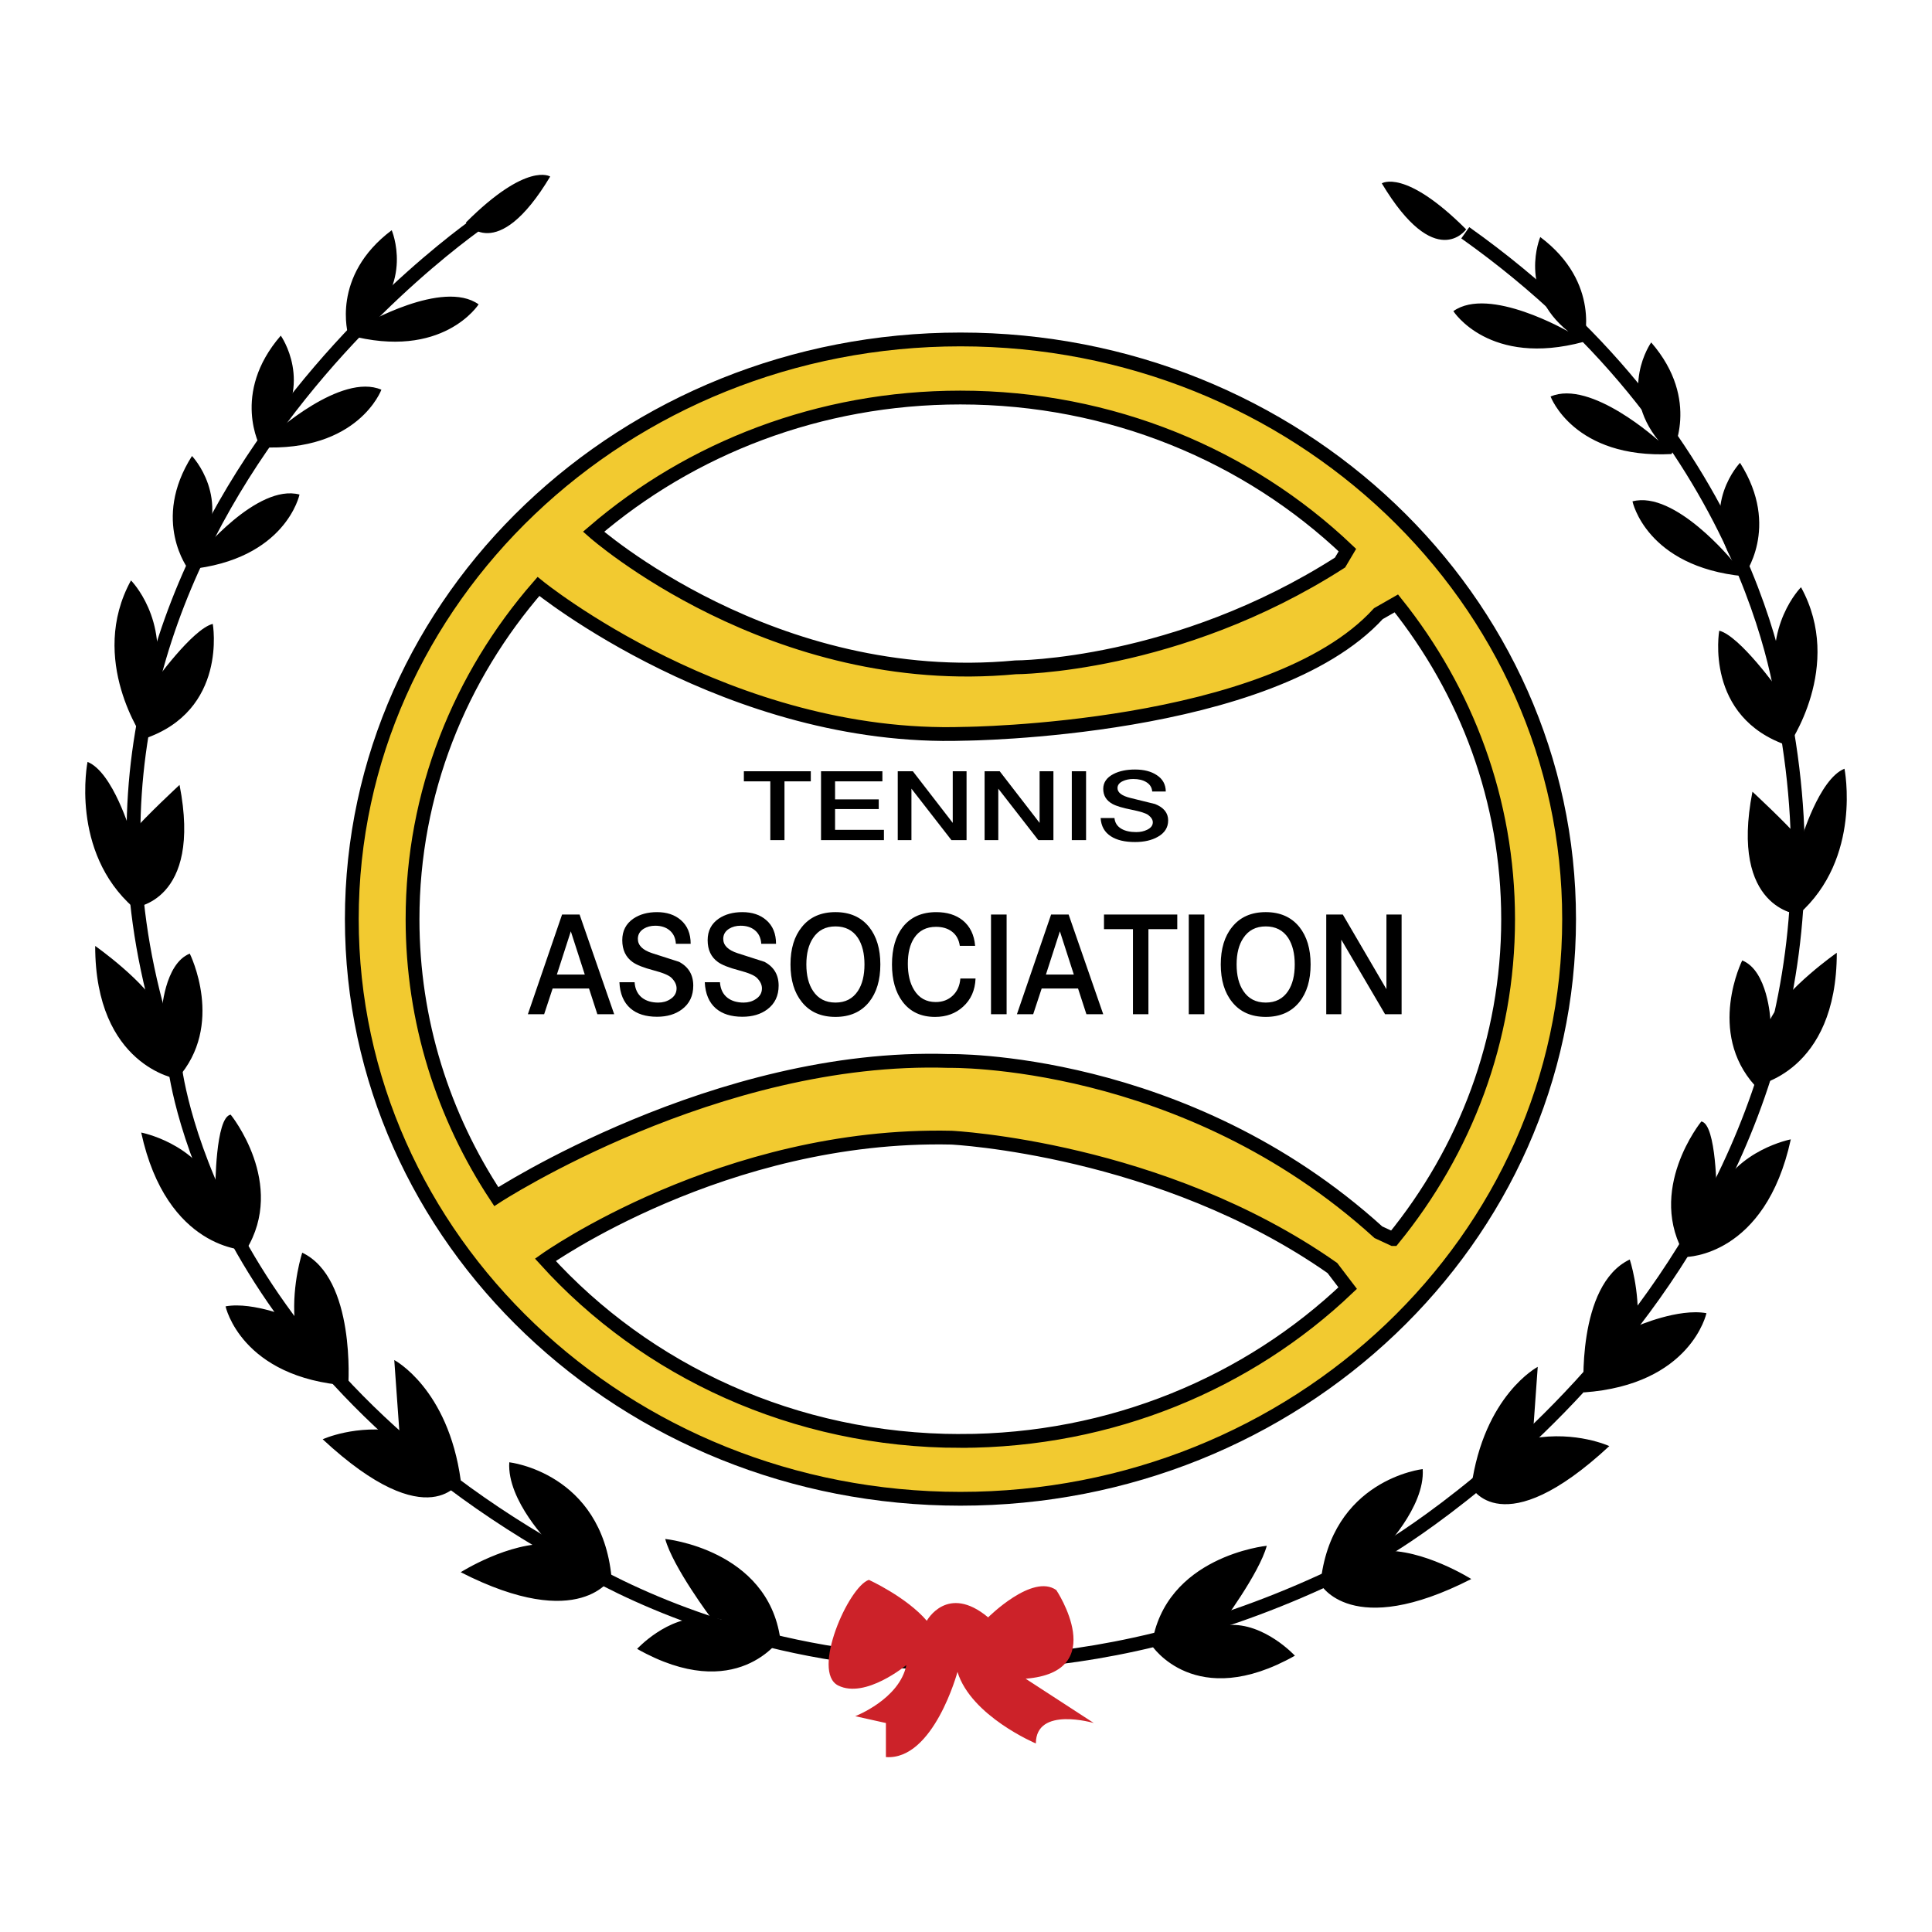 Association Of Tennis Professionals (ATP) World Tour logo colors